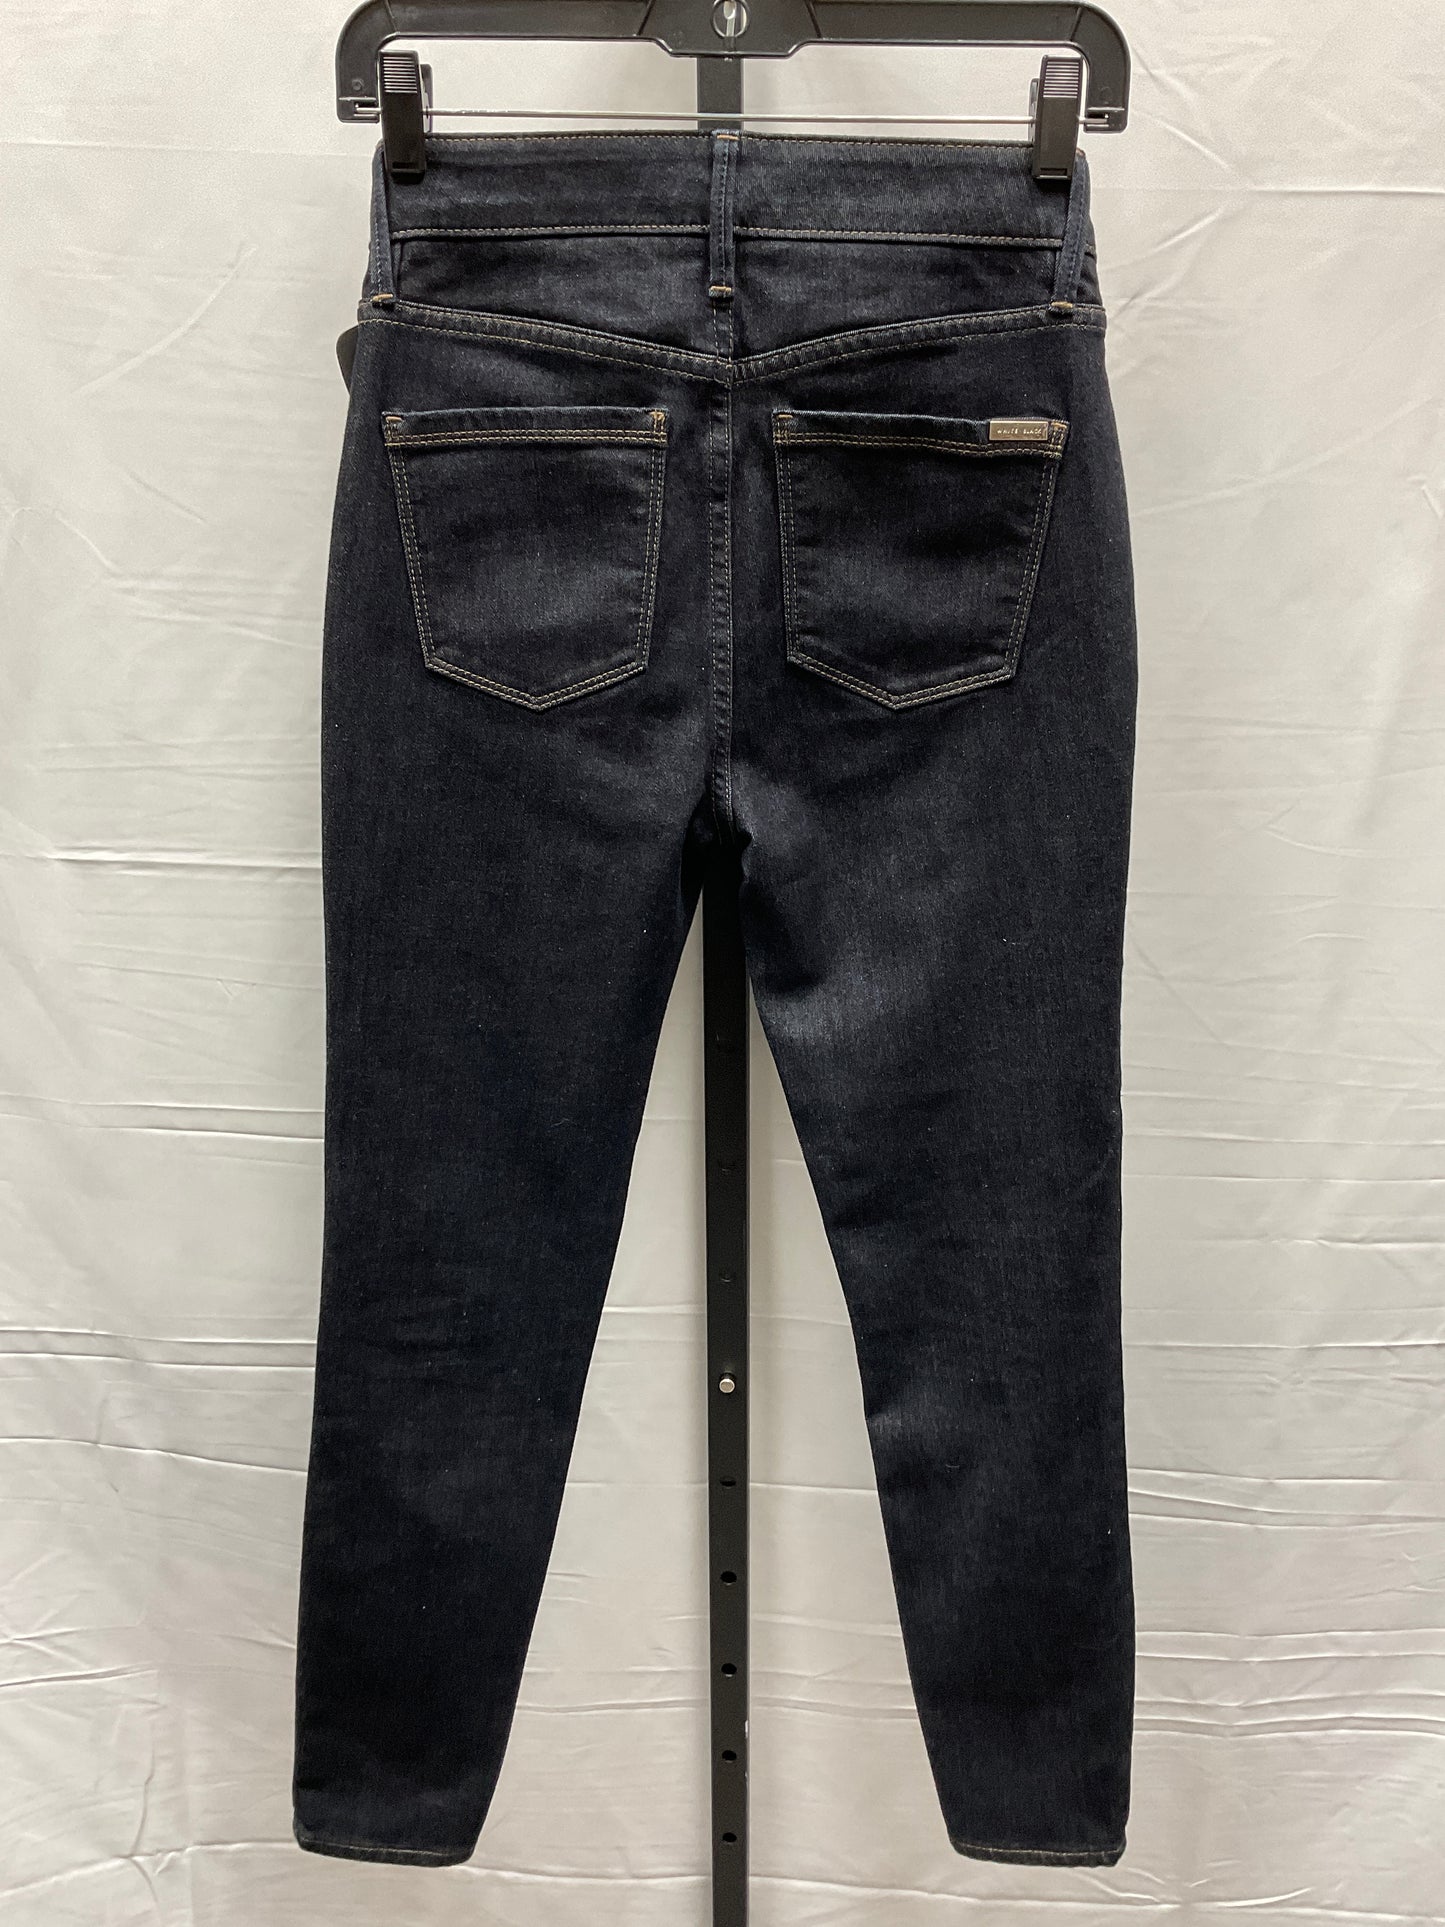 Jeans Skinny By White House Black Market  Size: 0